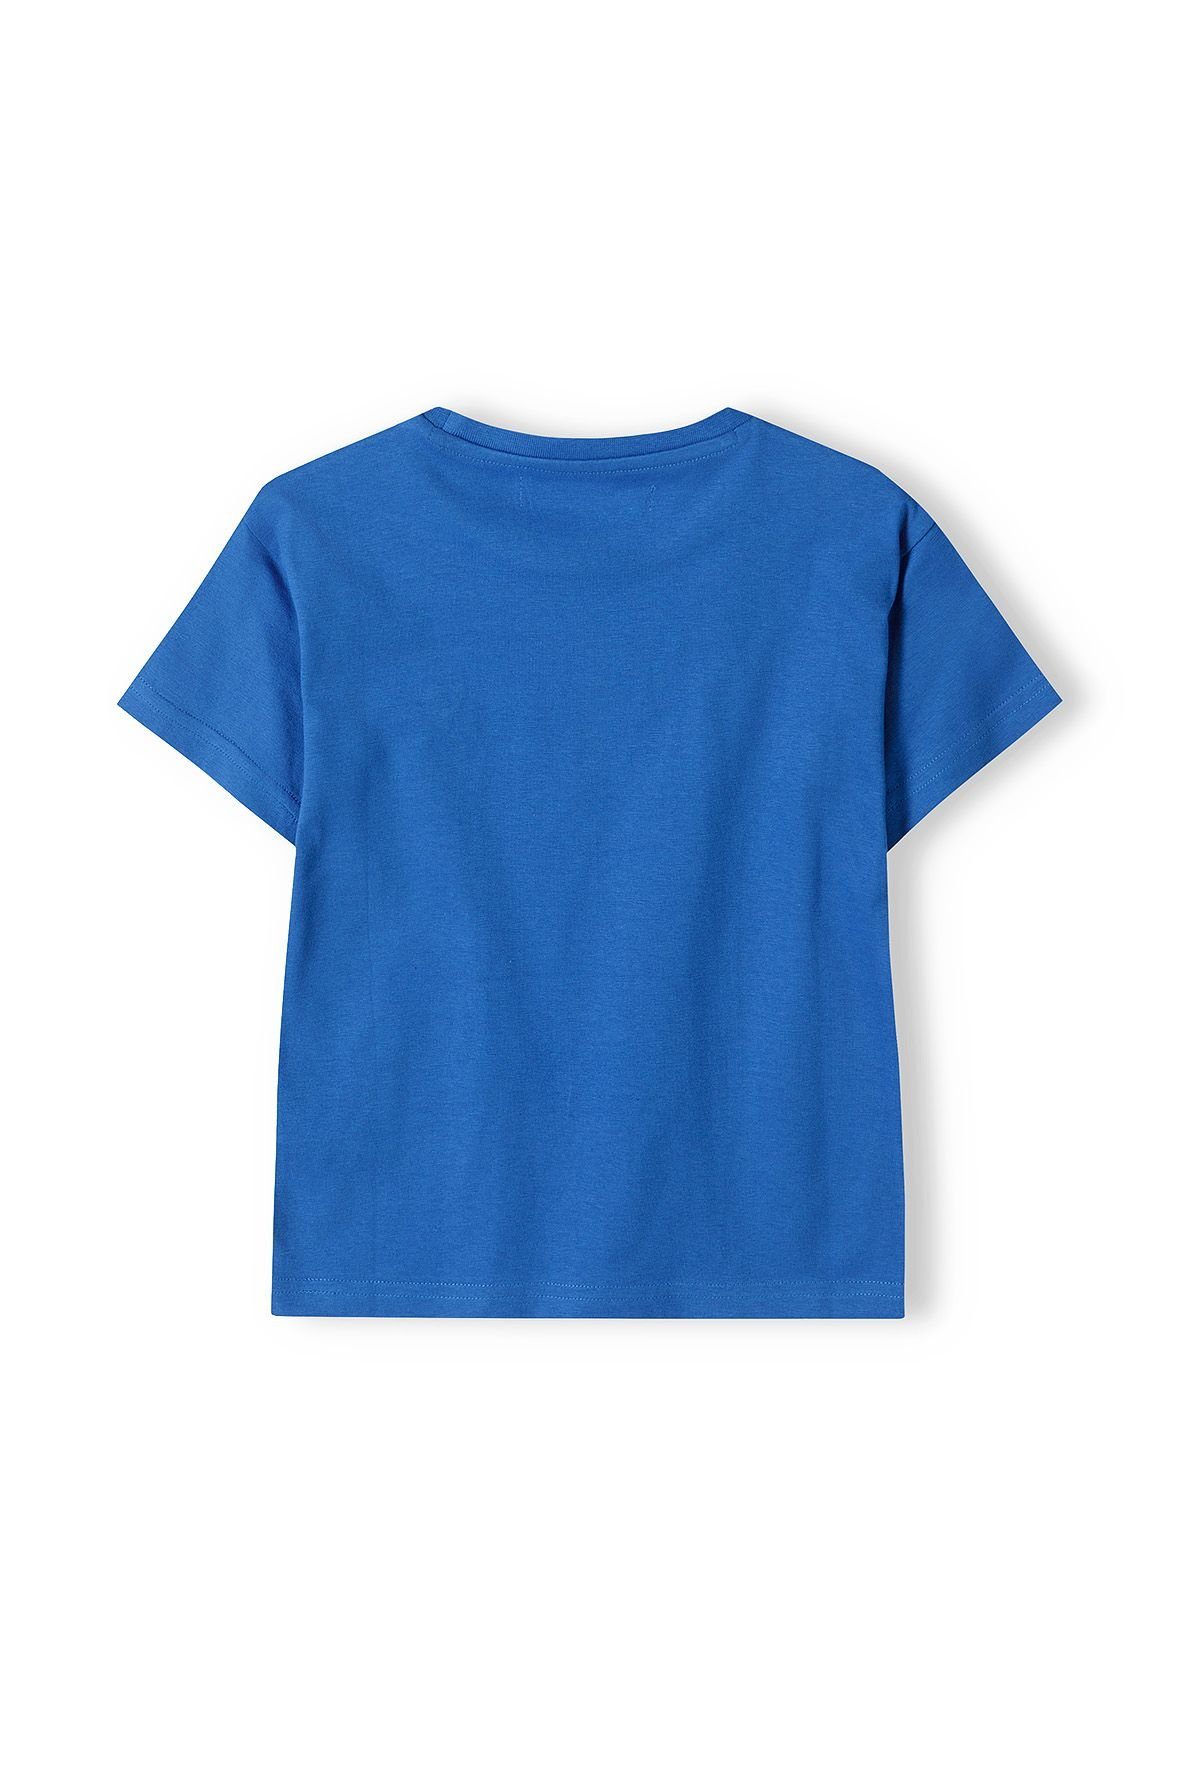 (12m-14y) T-Shirt T-Shirts MINOTI 4-Pack